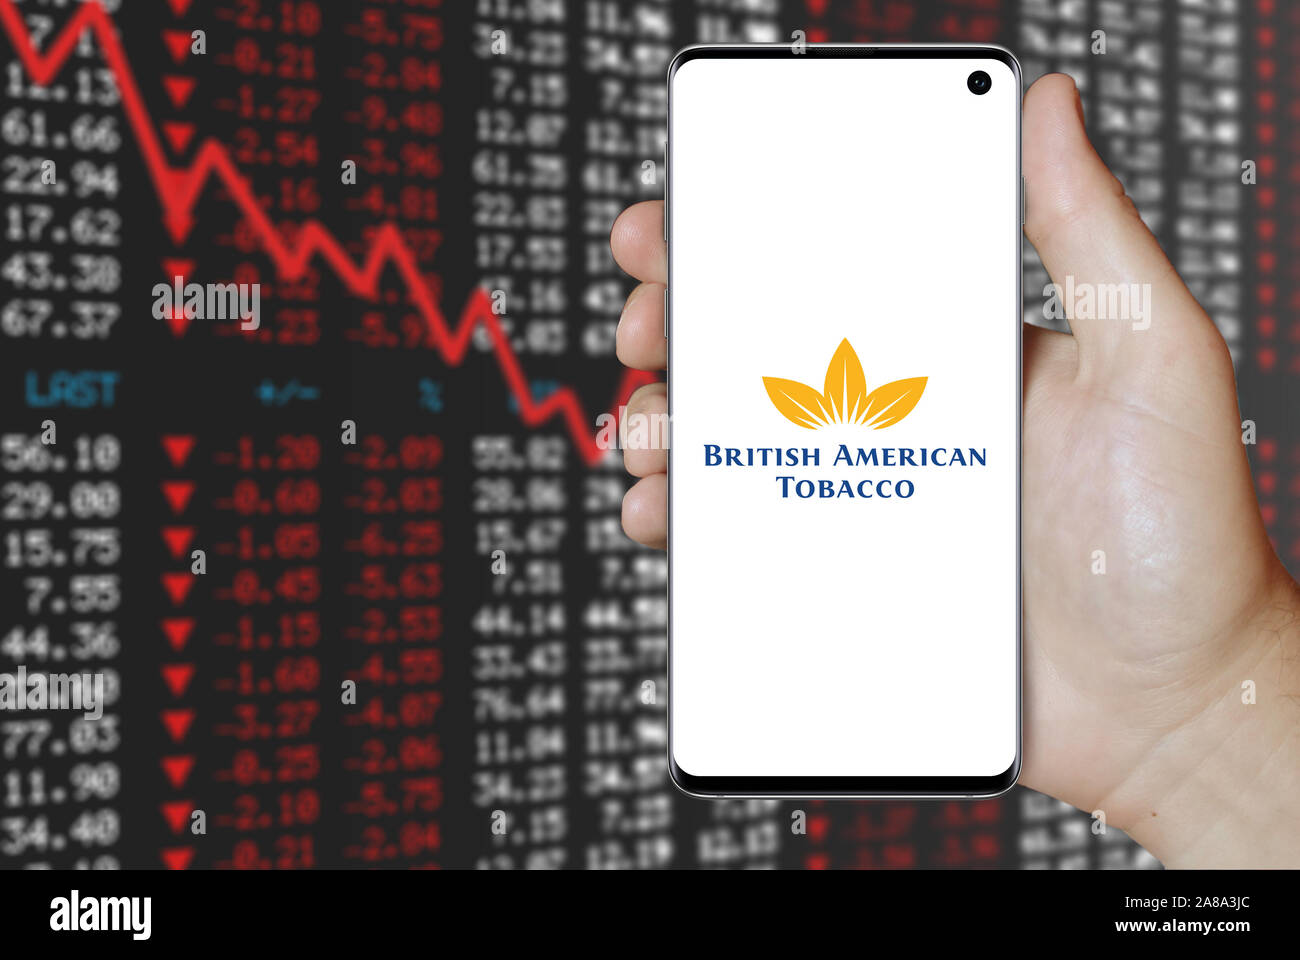 Logo of public company British American Tobacco displayed on a smartphone. Negative stock market background. Credit: PIXDUCE Stock Photo